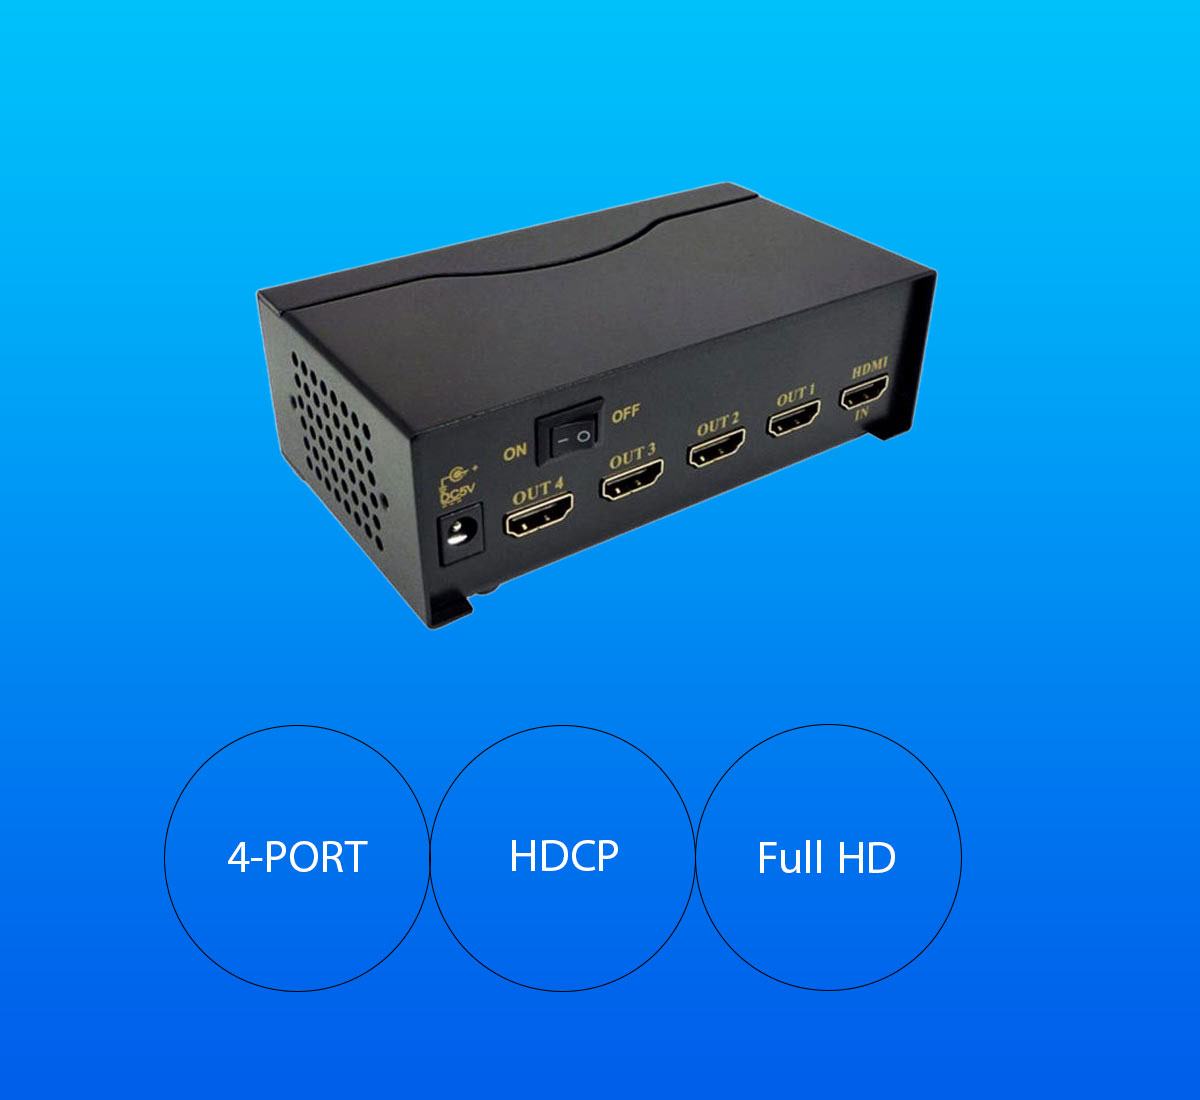 اسپلیتر HDMI کی نت پلاس K-netplus KPS644 چهار پورت